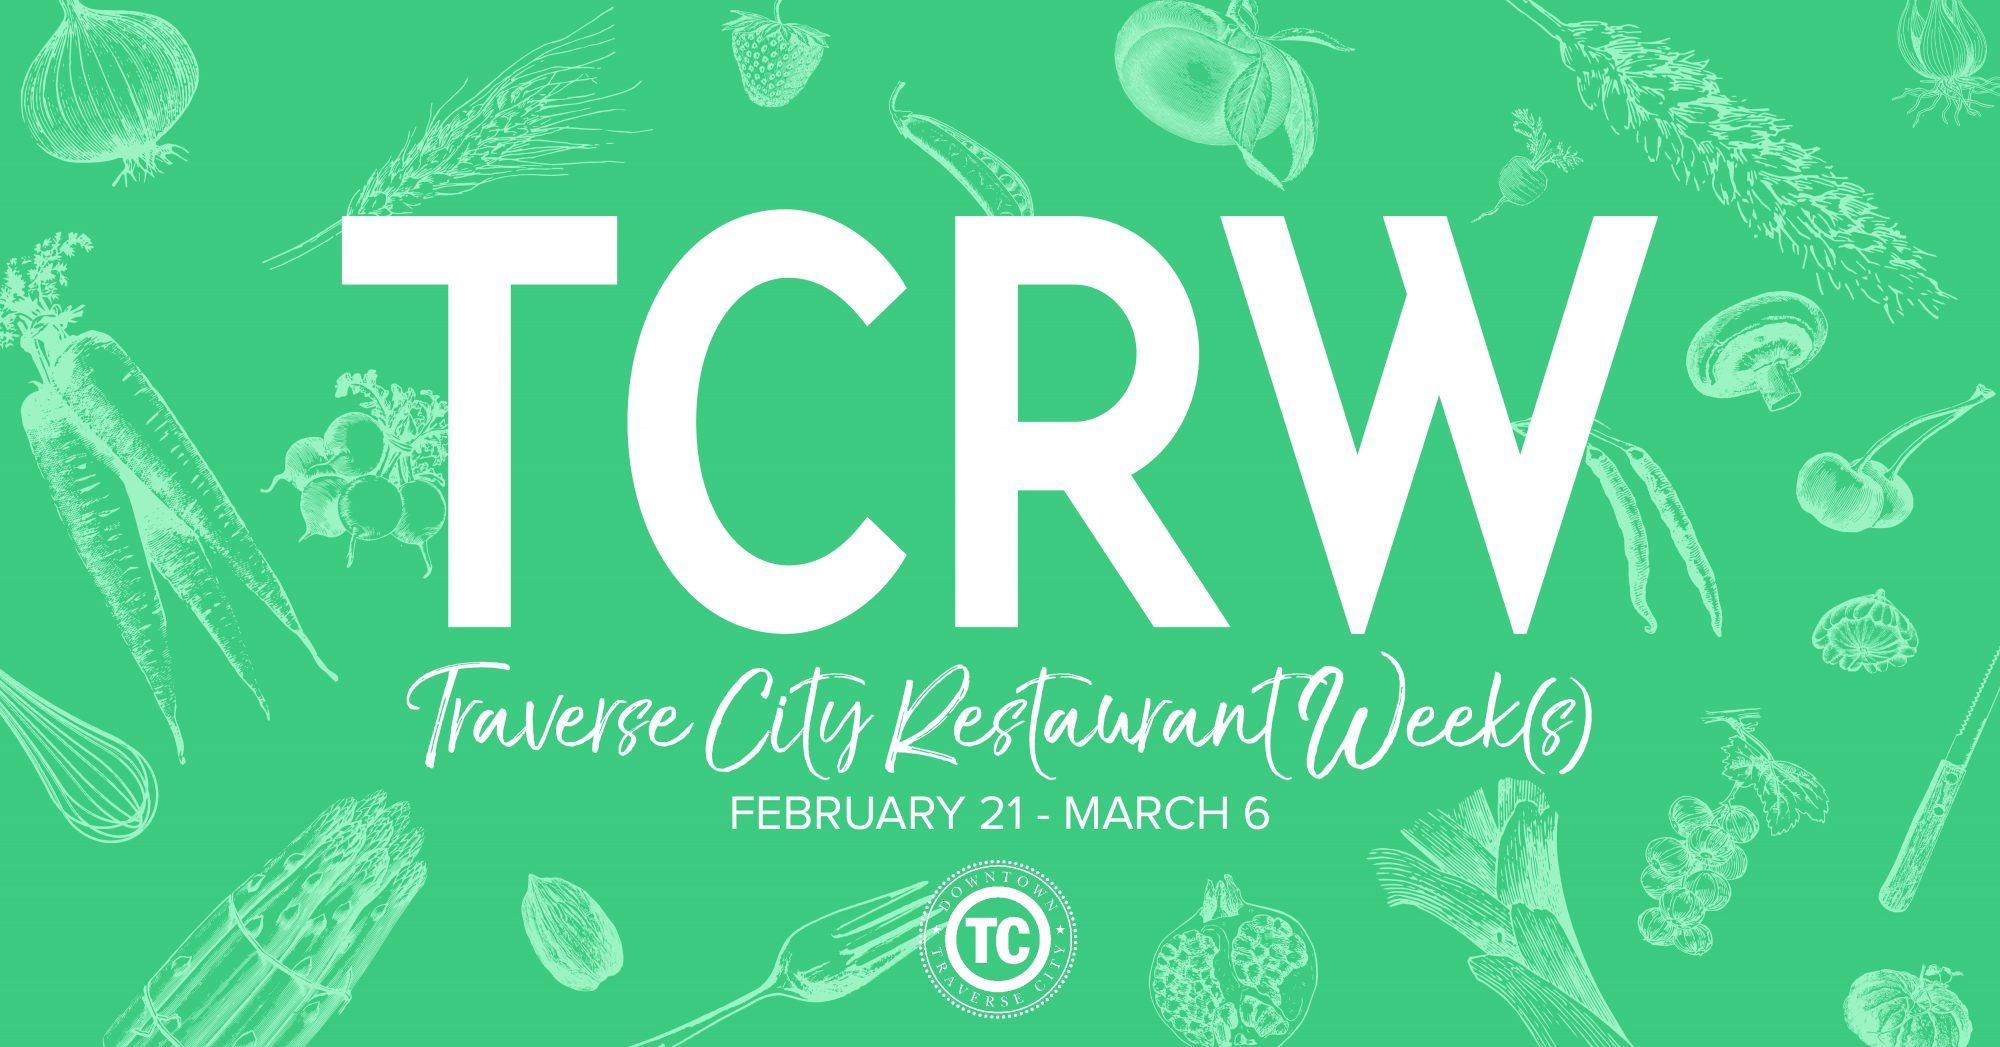 Traverse City Restaurant Week Experience Downtown